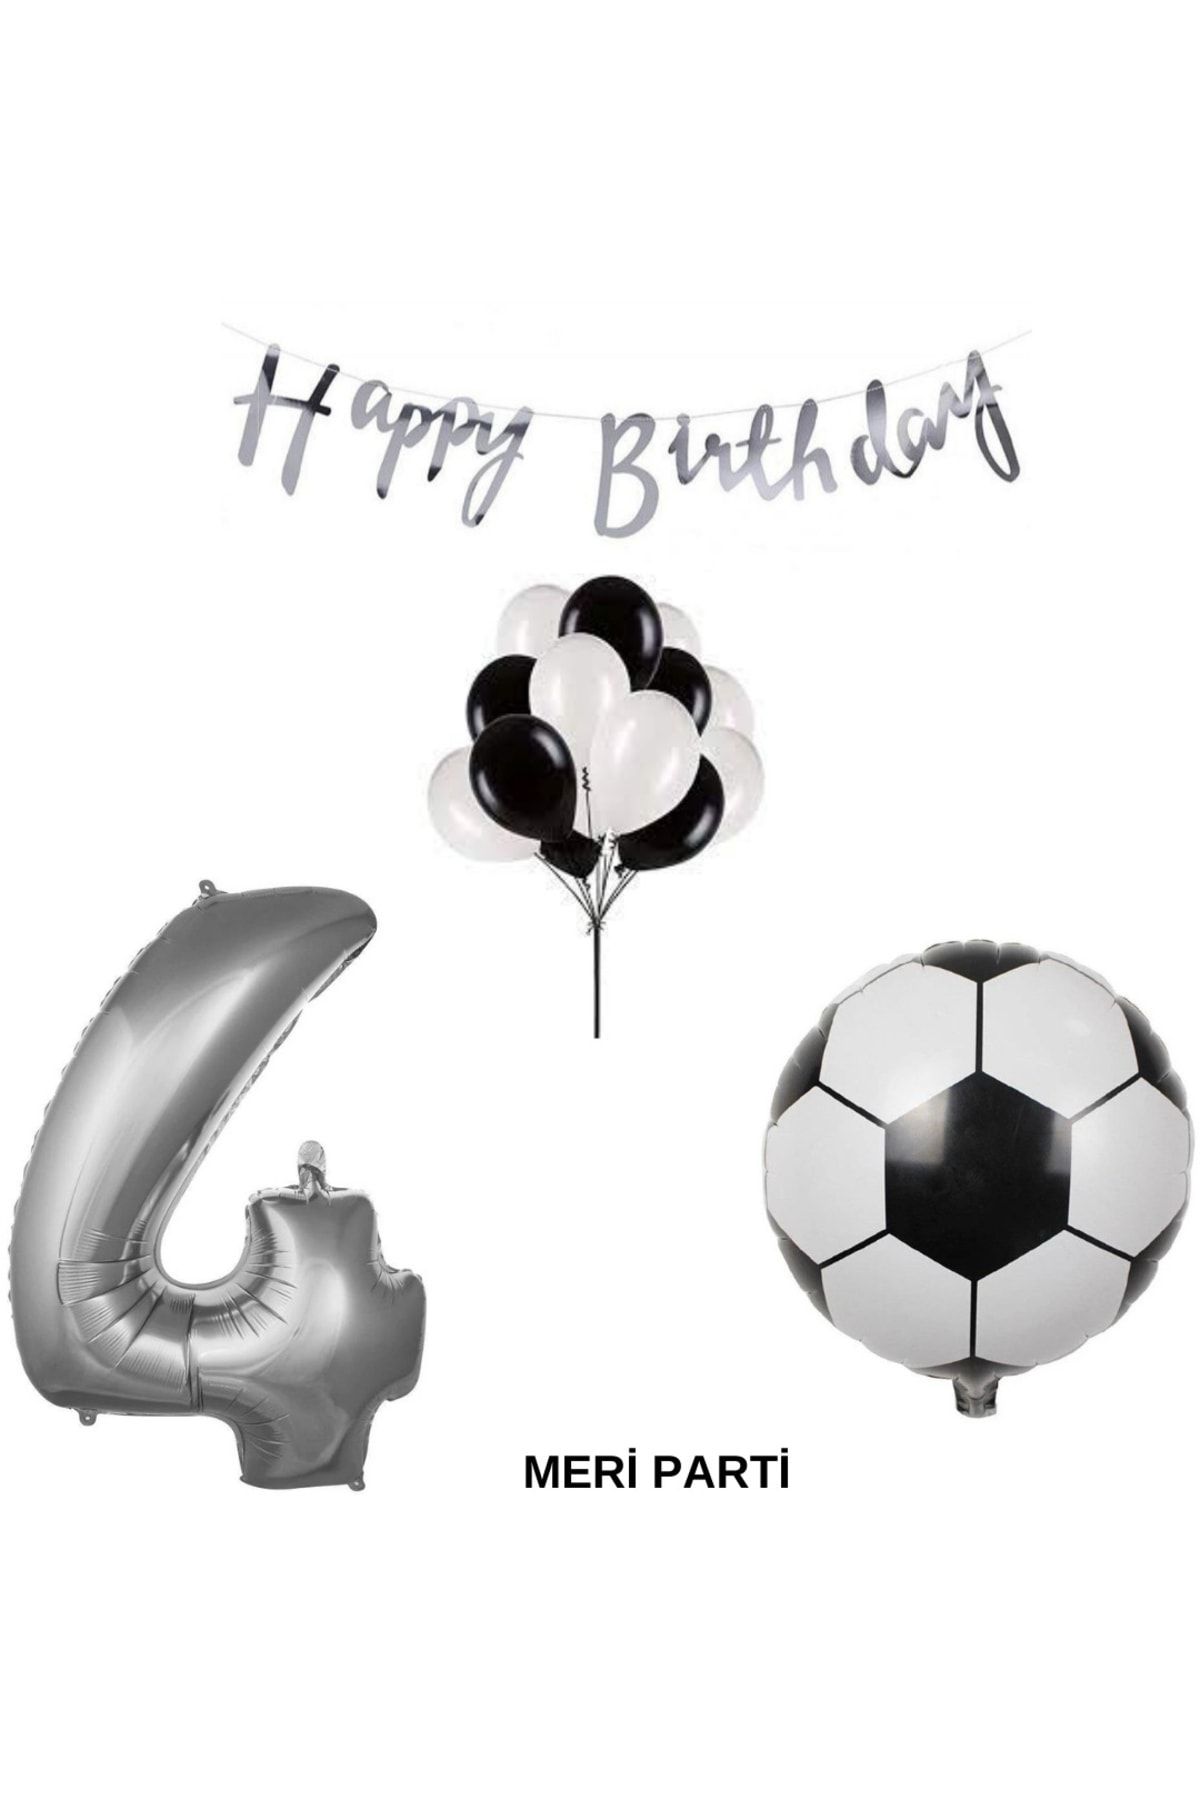 MERİ PARTİ Beşiktaş Temalı Doğum Günü Parti Seti Yaş Balonu Siyah Beyaz Balon Happy Bırthday Banner Parti Set